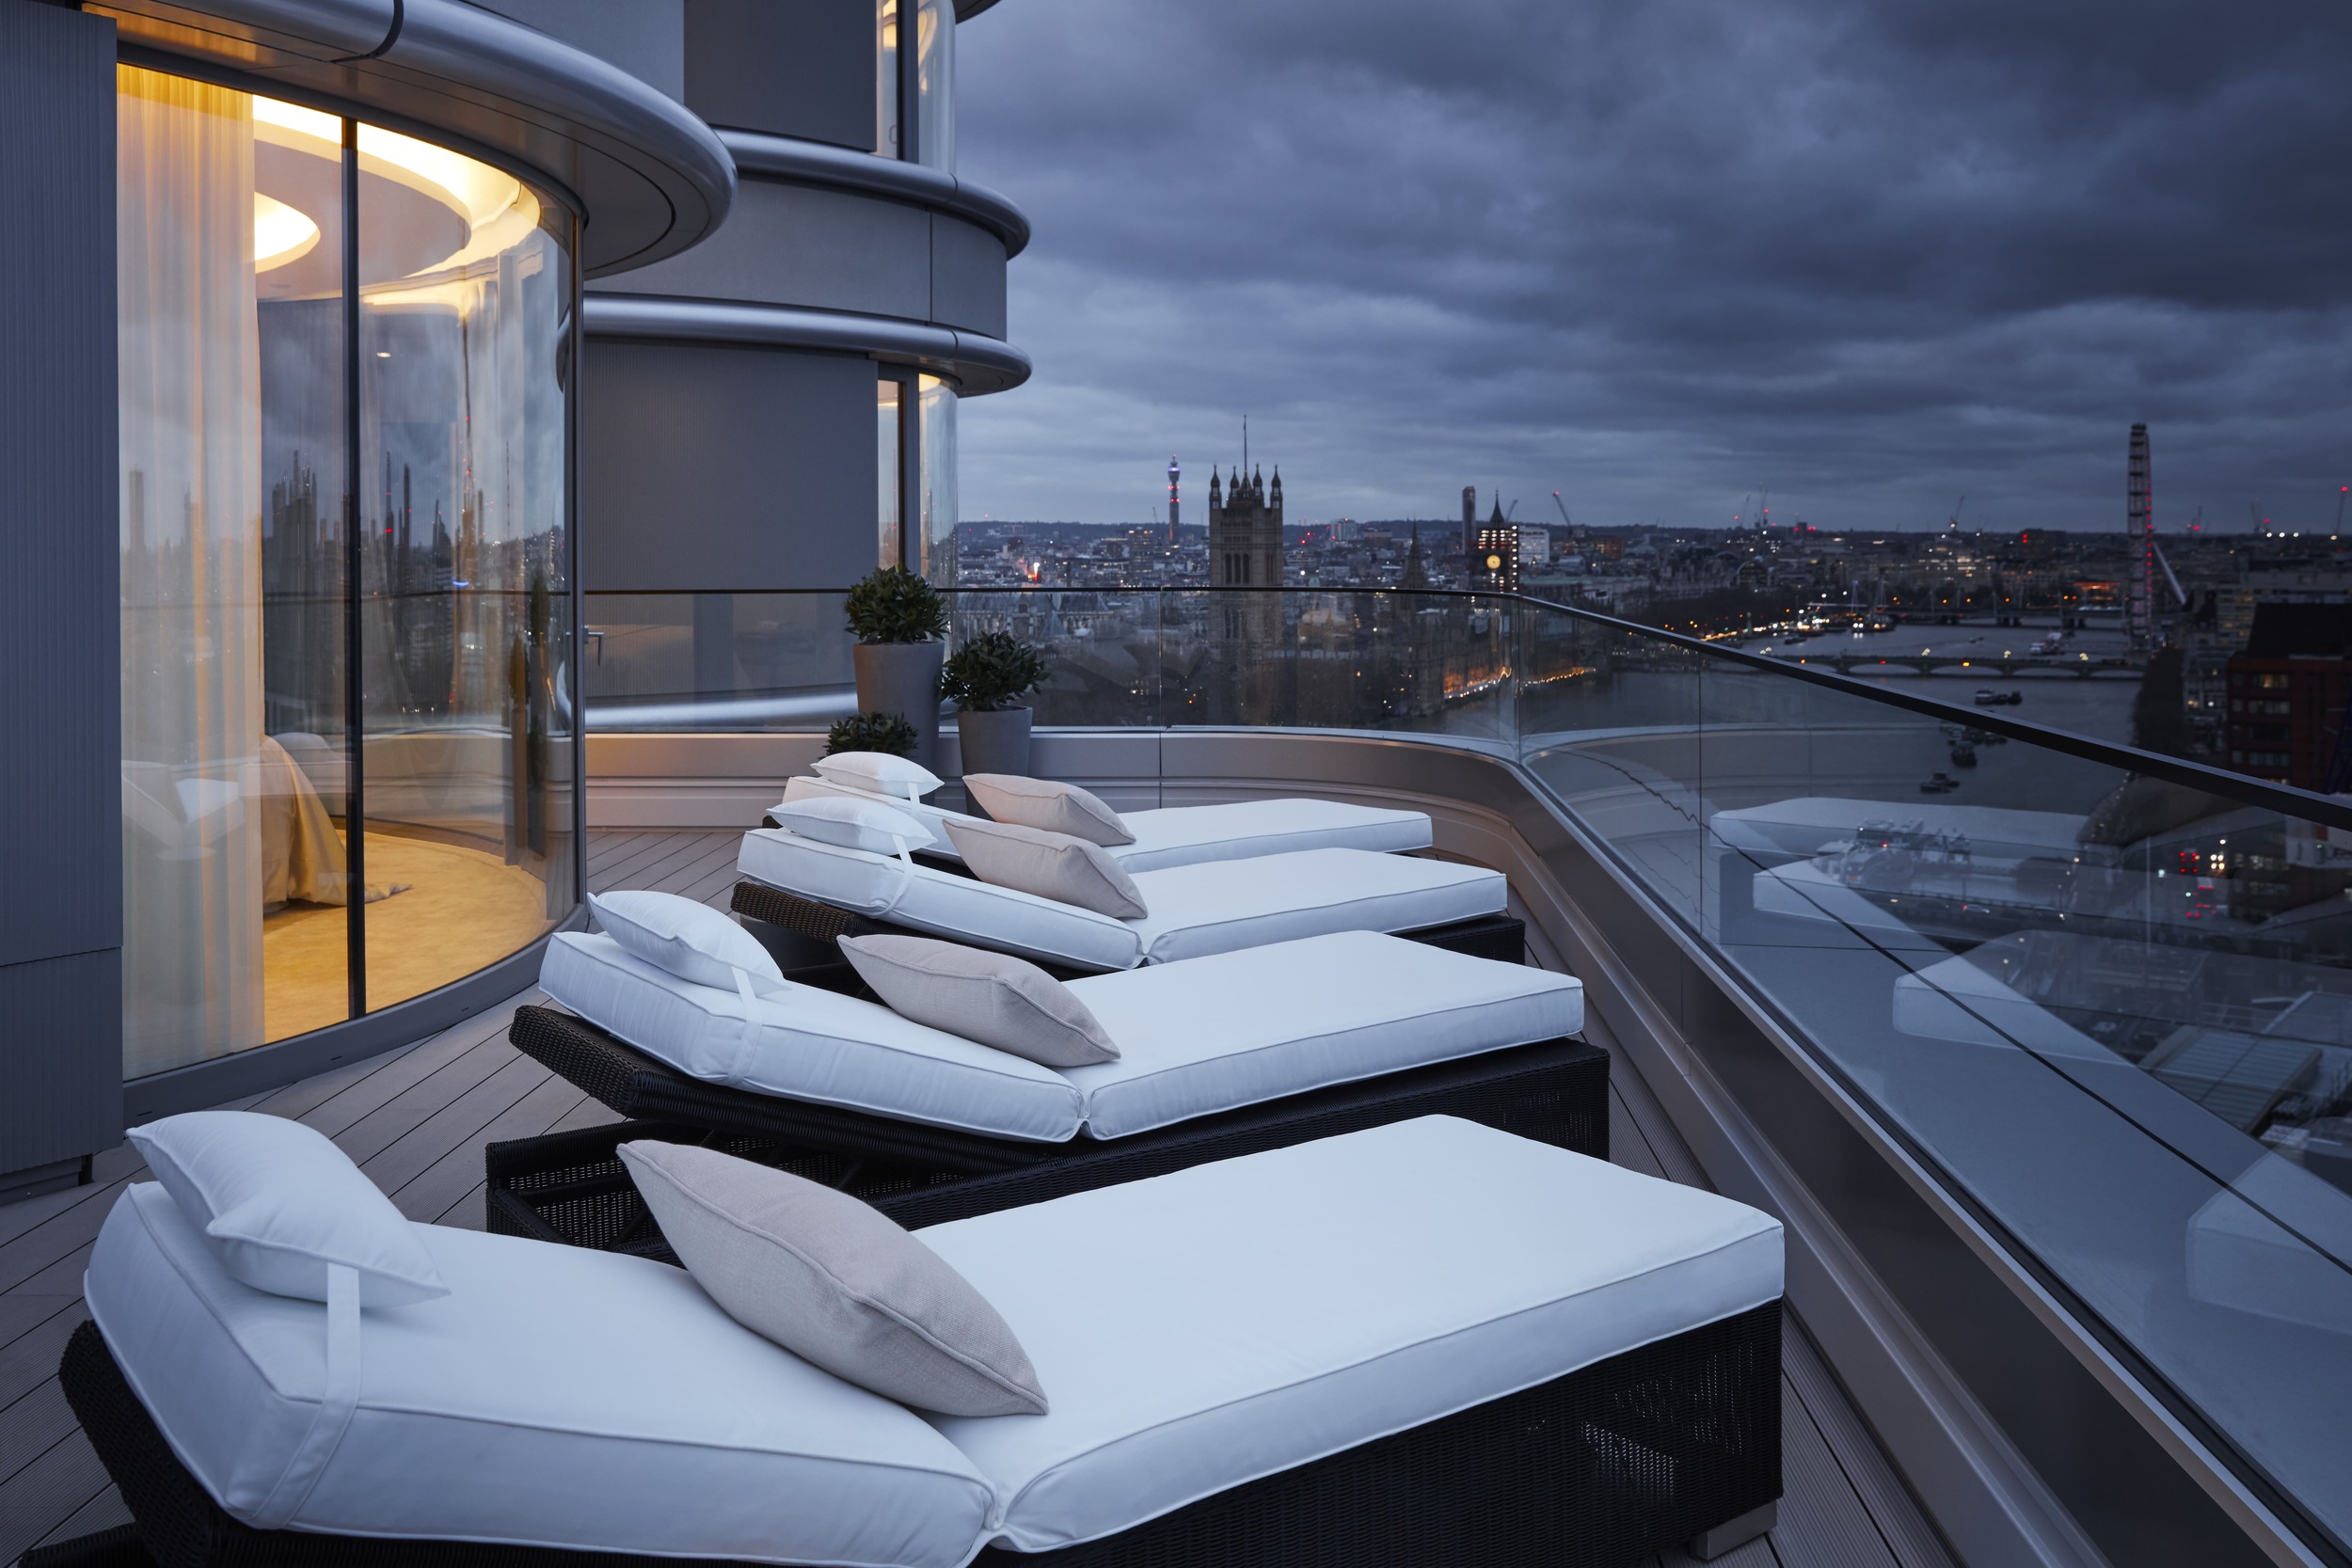 Balcony and loungers overlook London skyline